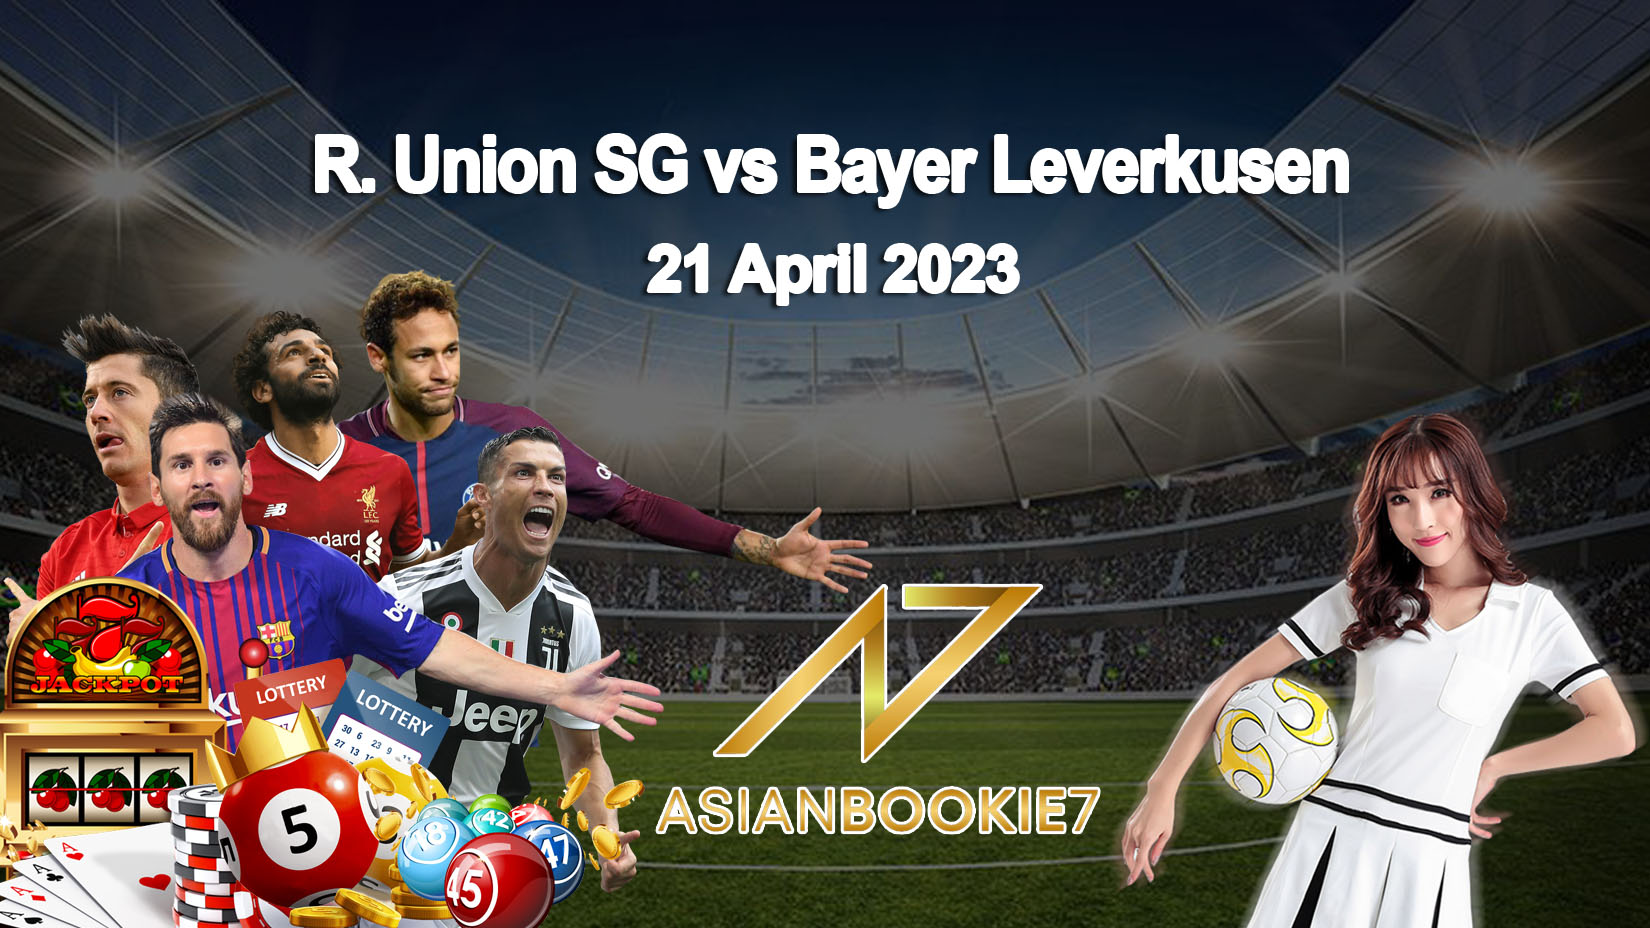 Prediksi R Union SG vs Bayer Leverkusen 21 April 2023